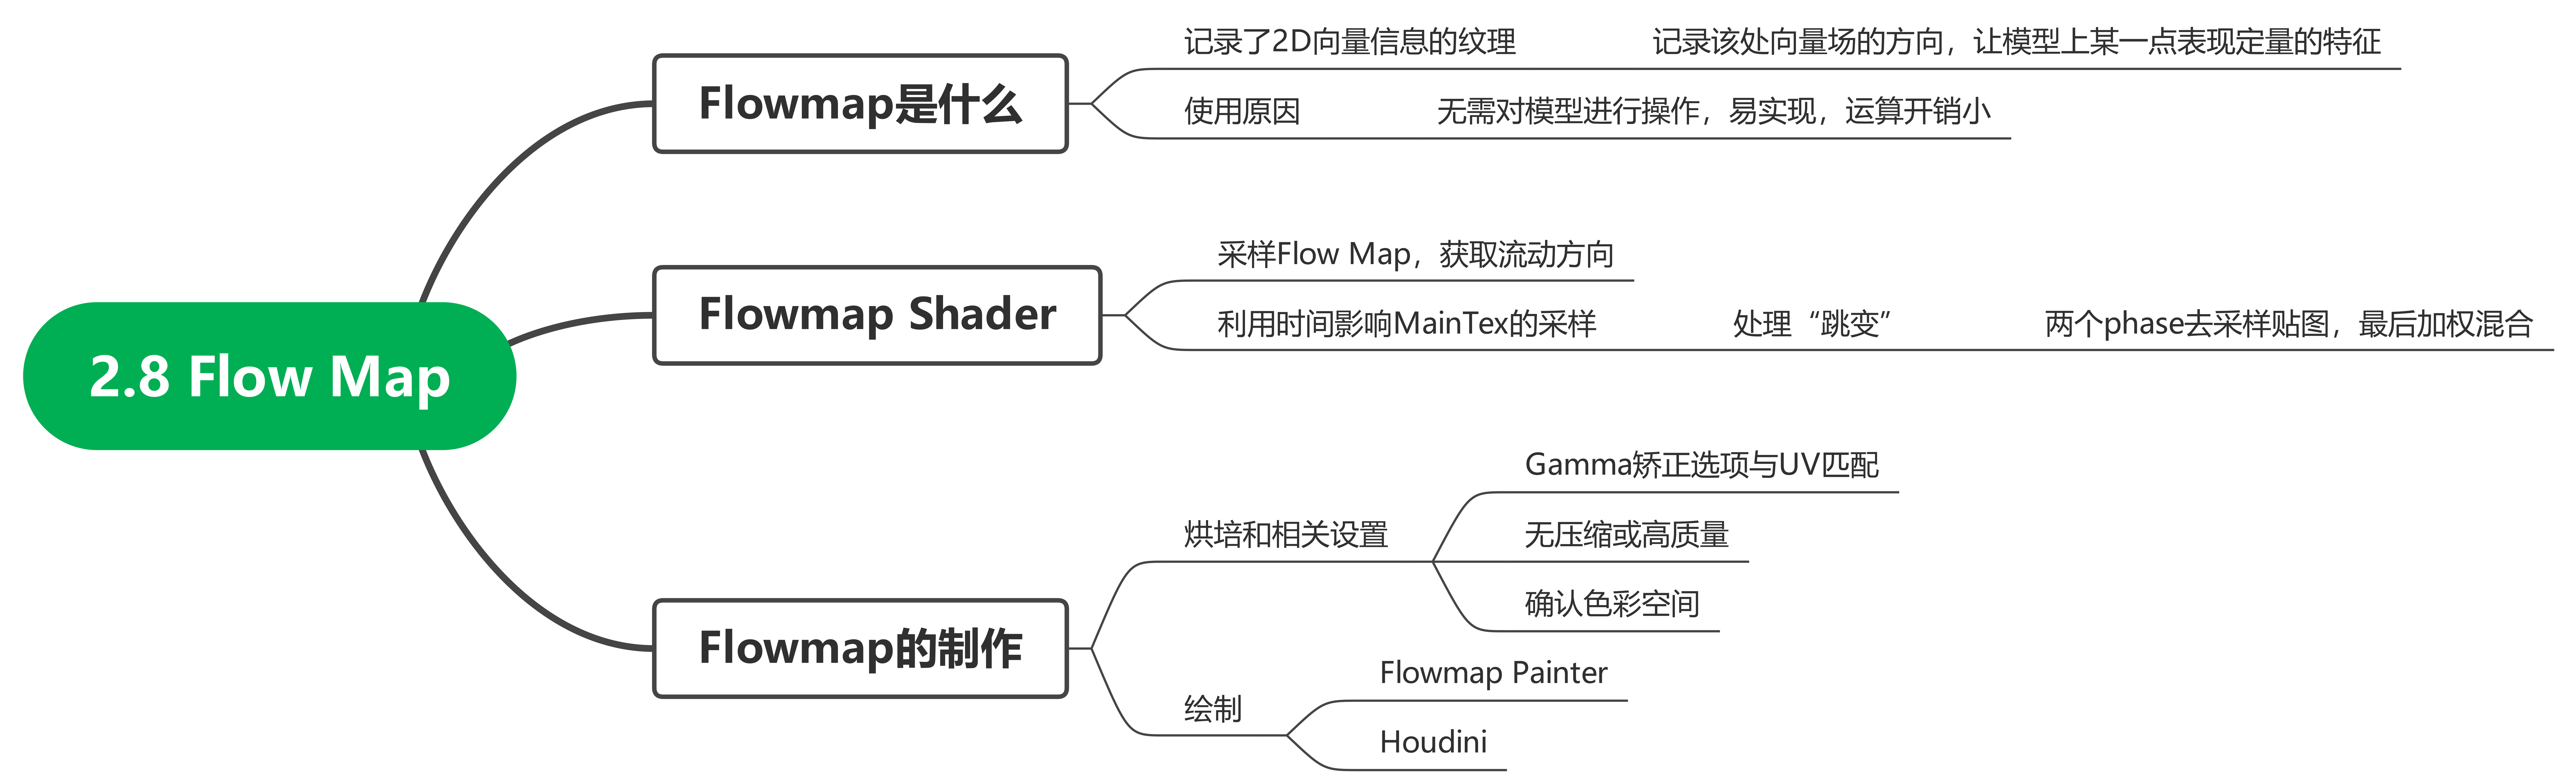 【图形渲染】 2.8 Flow Map